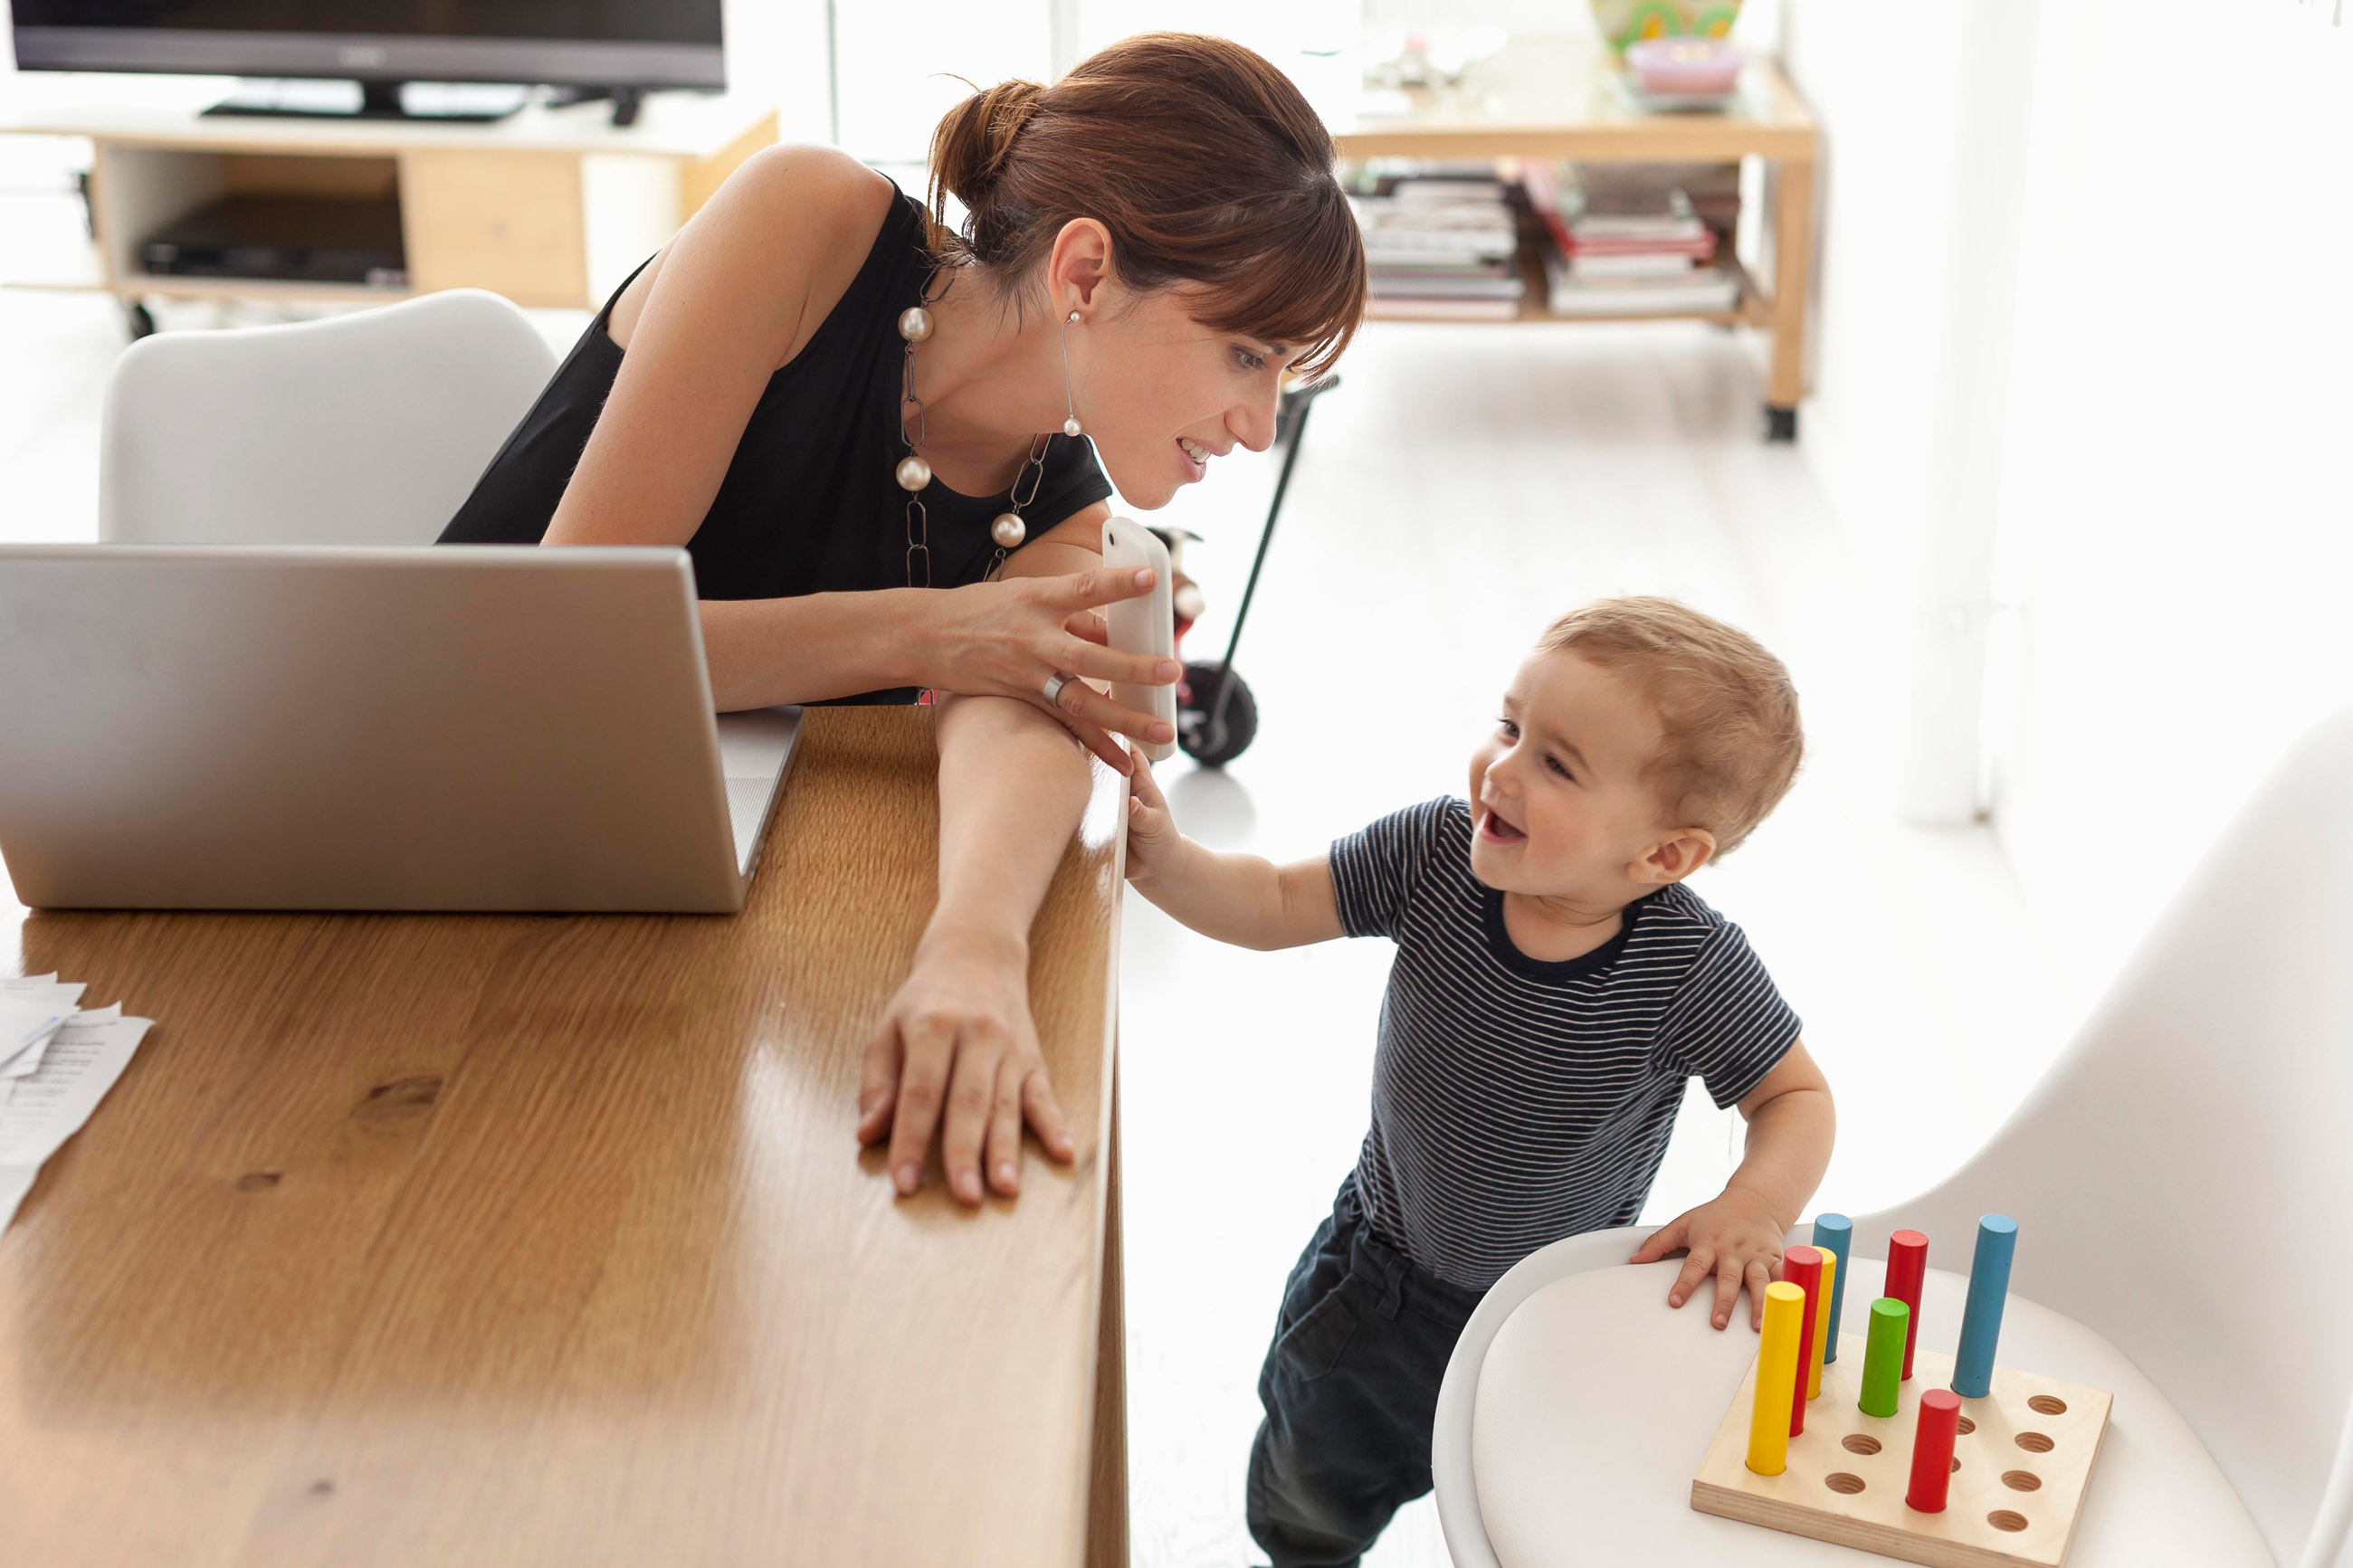 SAP Startup Spotlight: The Mom Project